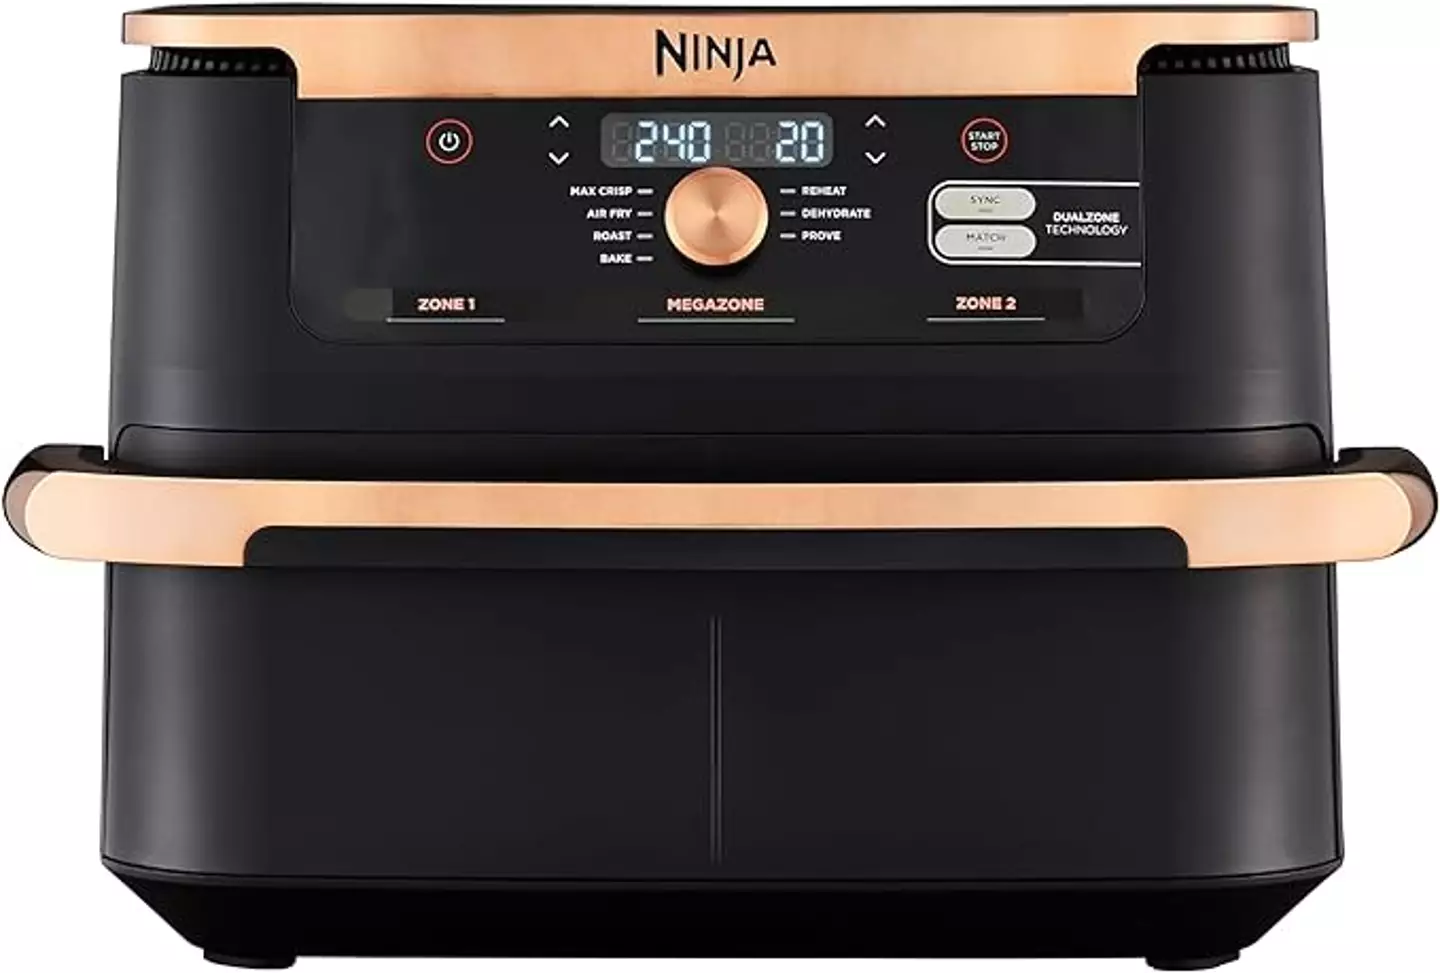 The Ninja Foodi FlexDrawer Air Fryer